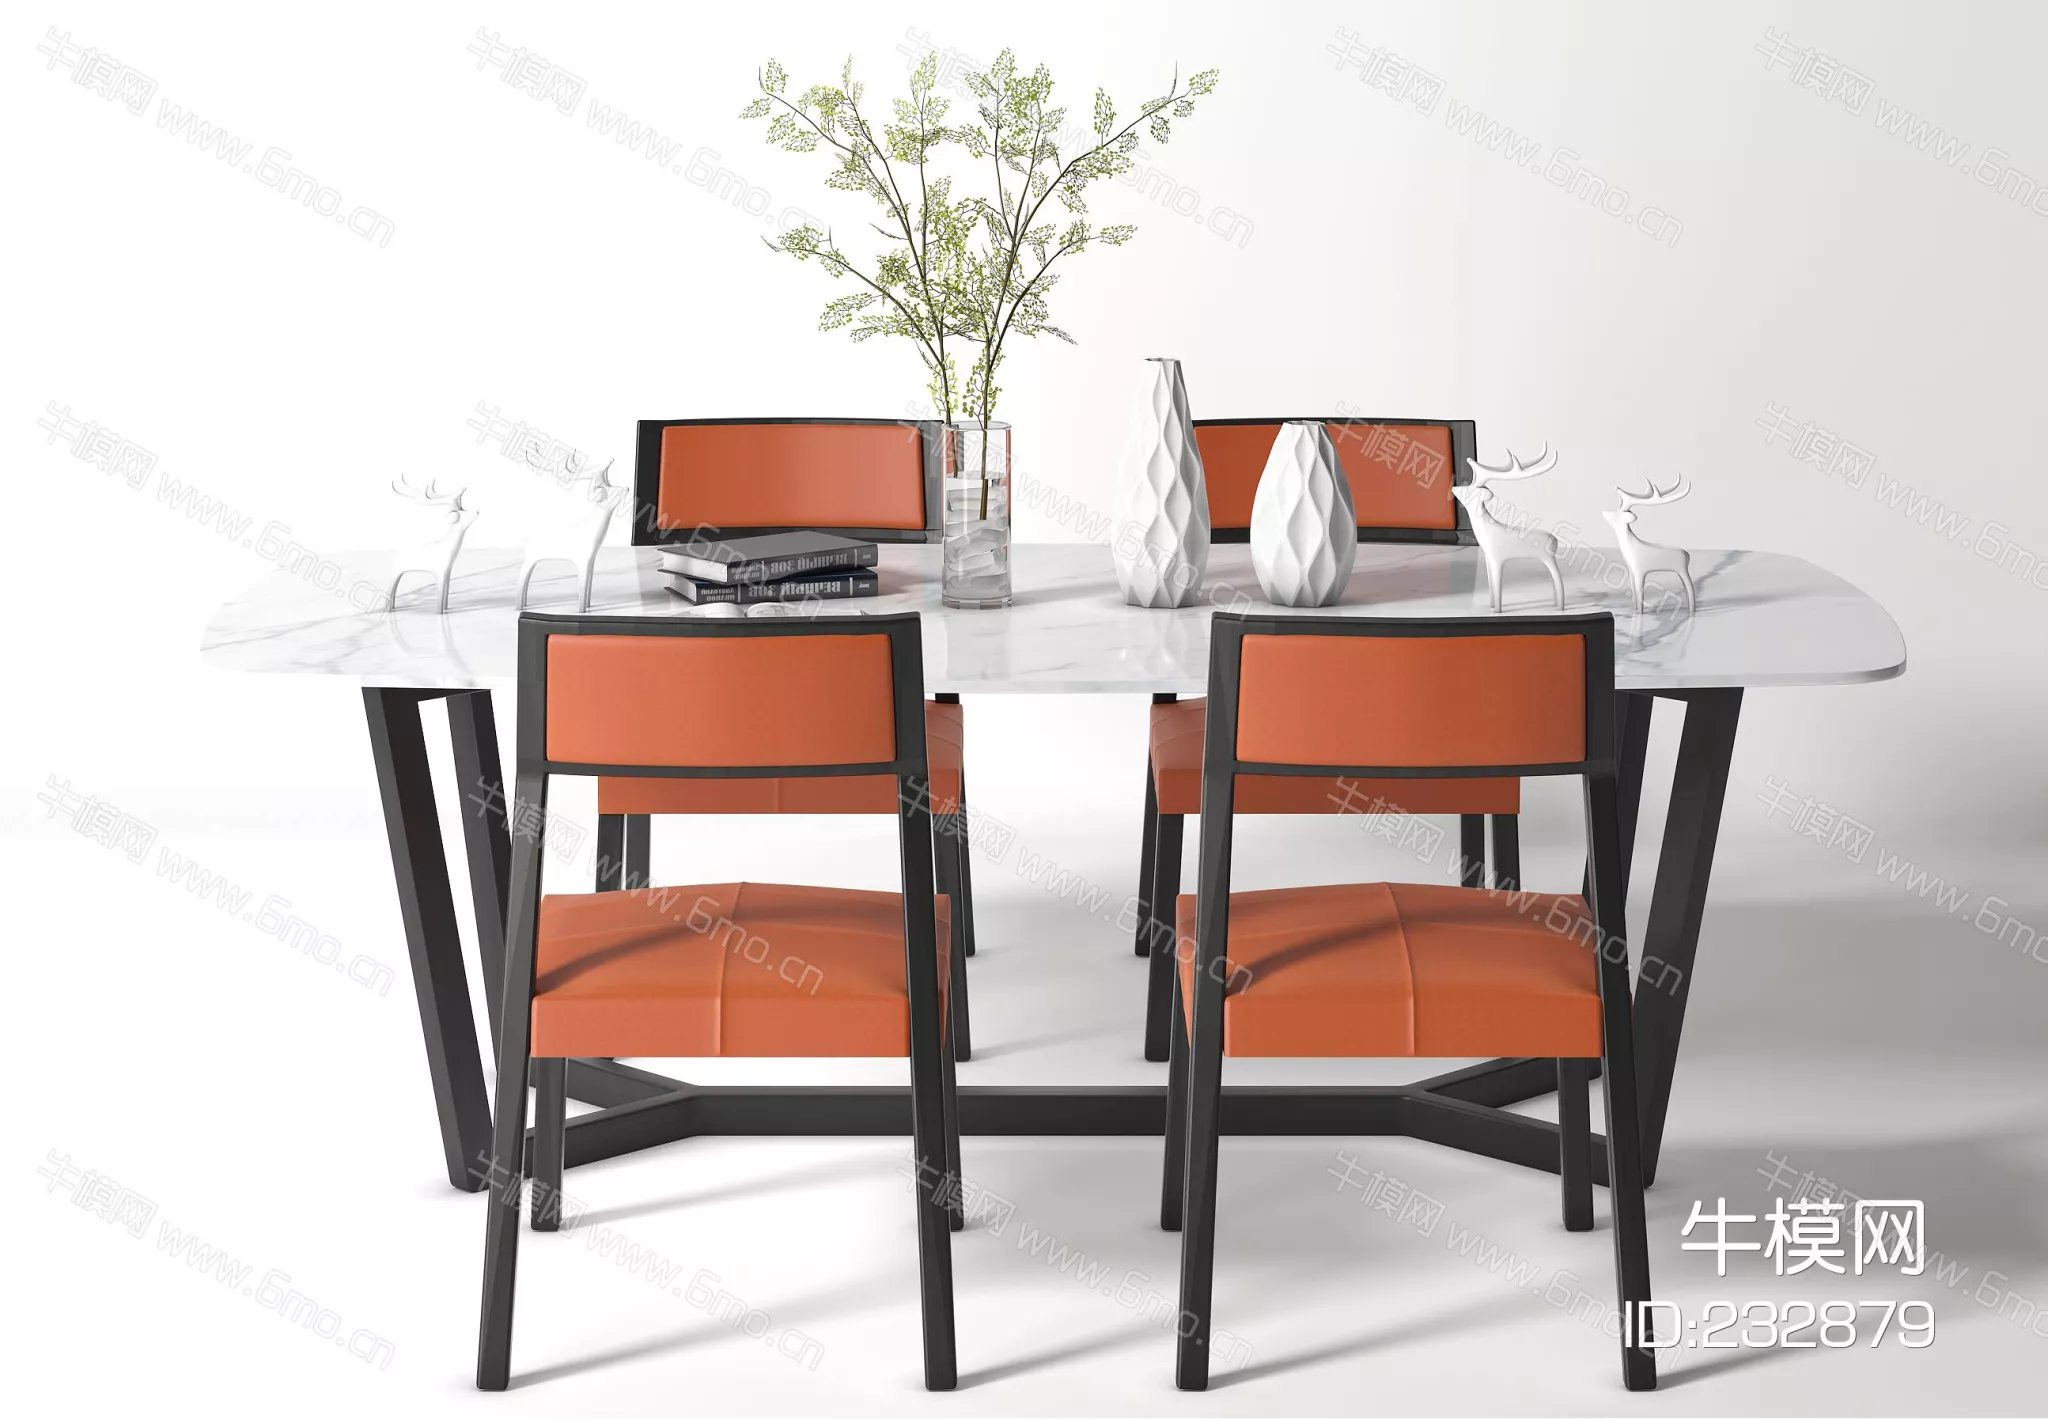 MODERN DINING TABLE SET - SKETCHUP 3D MODEL - VRAY - 232879